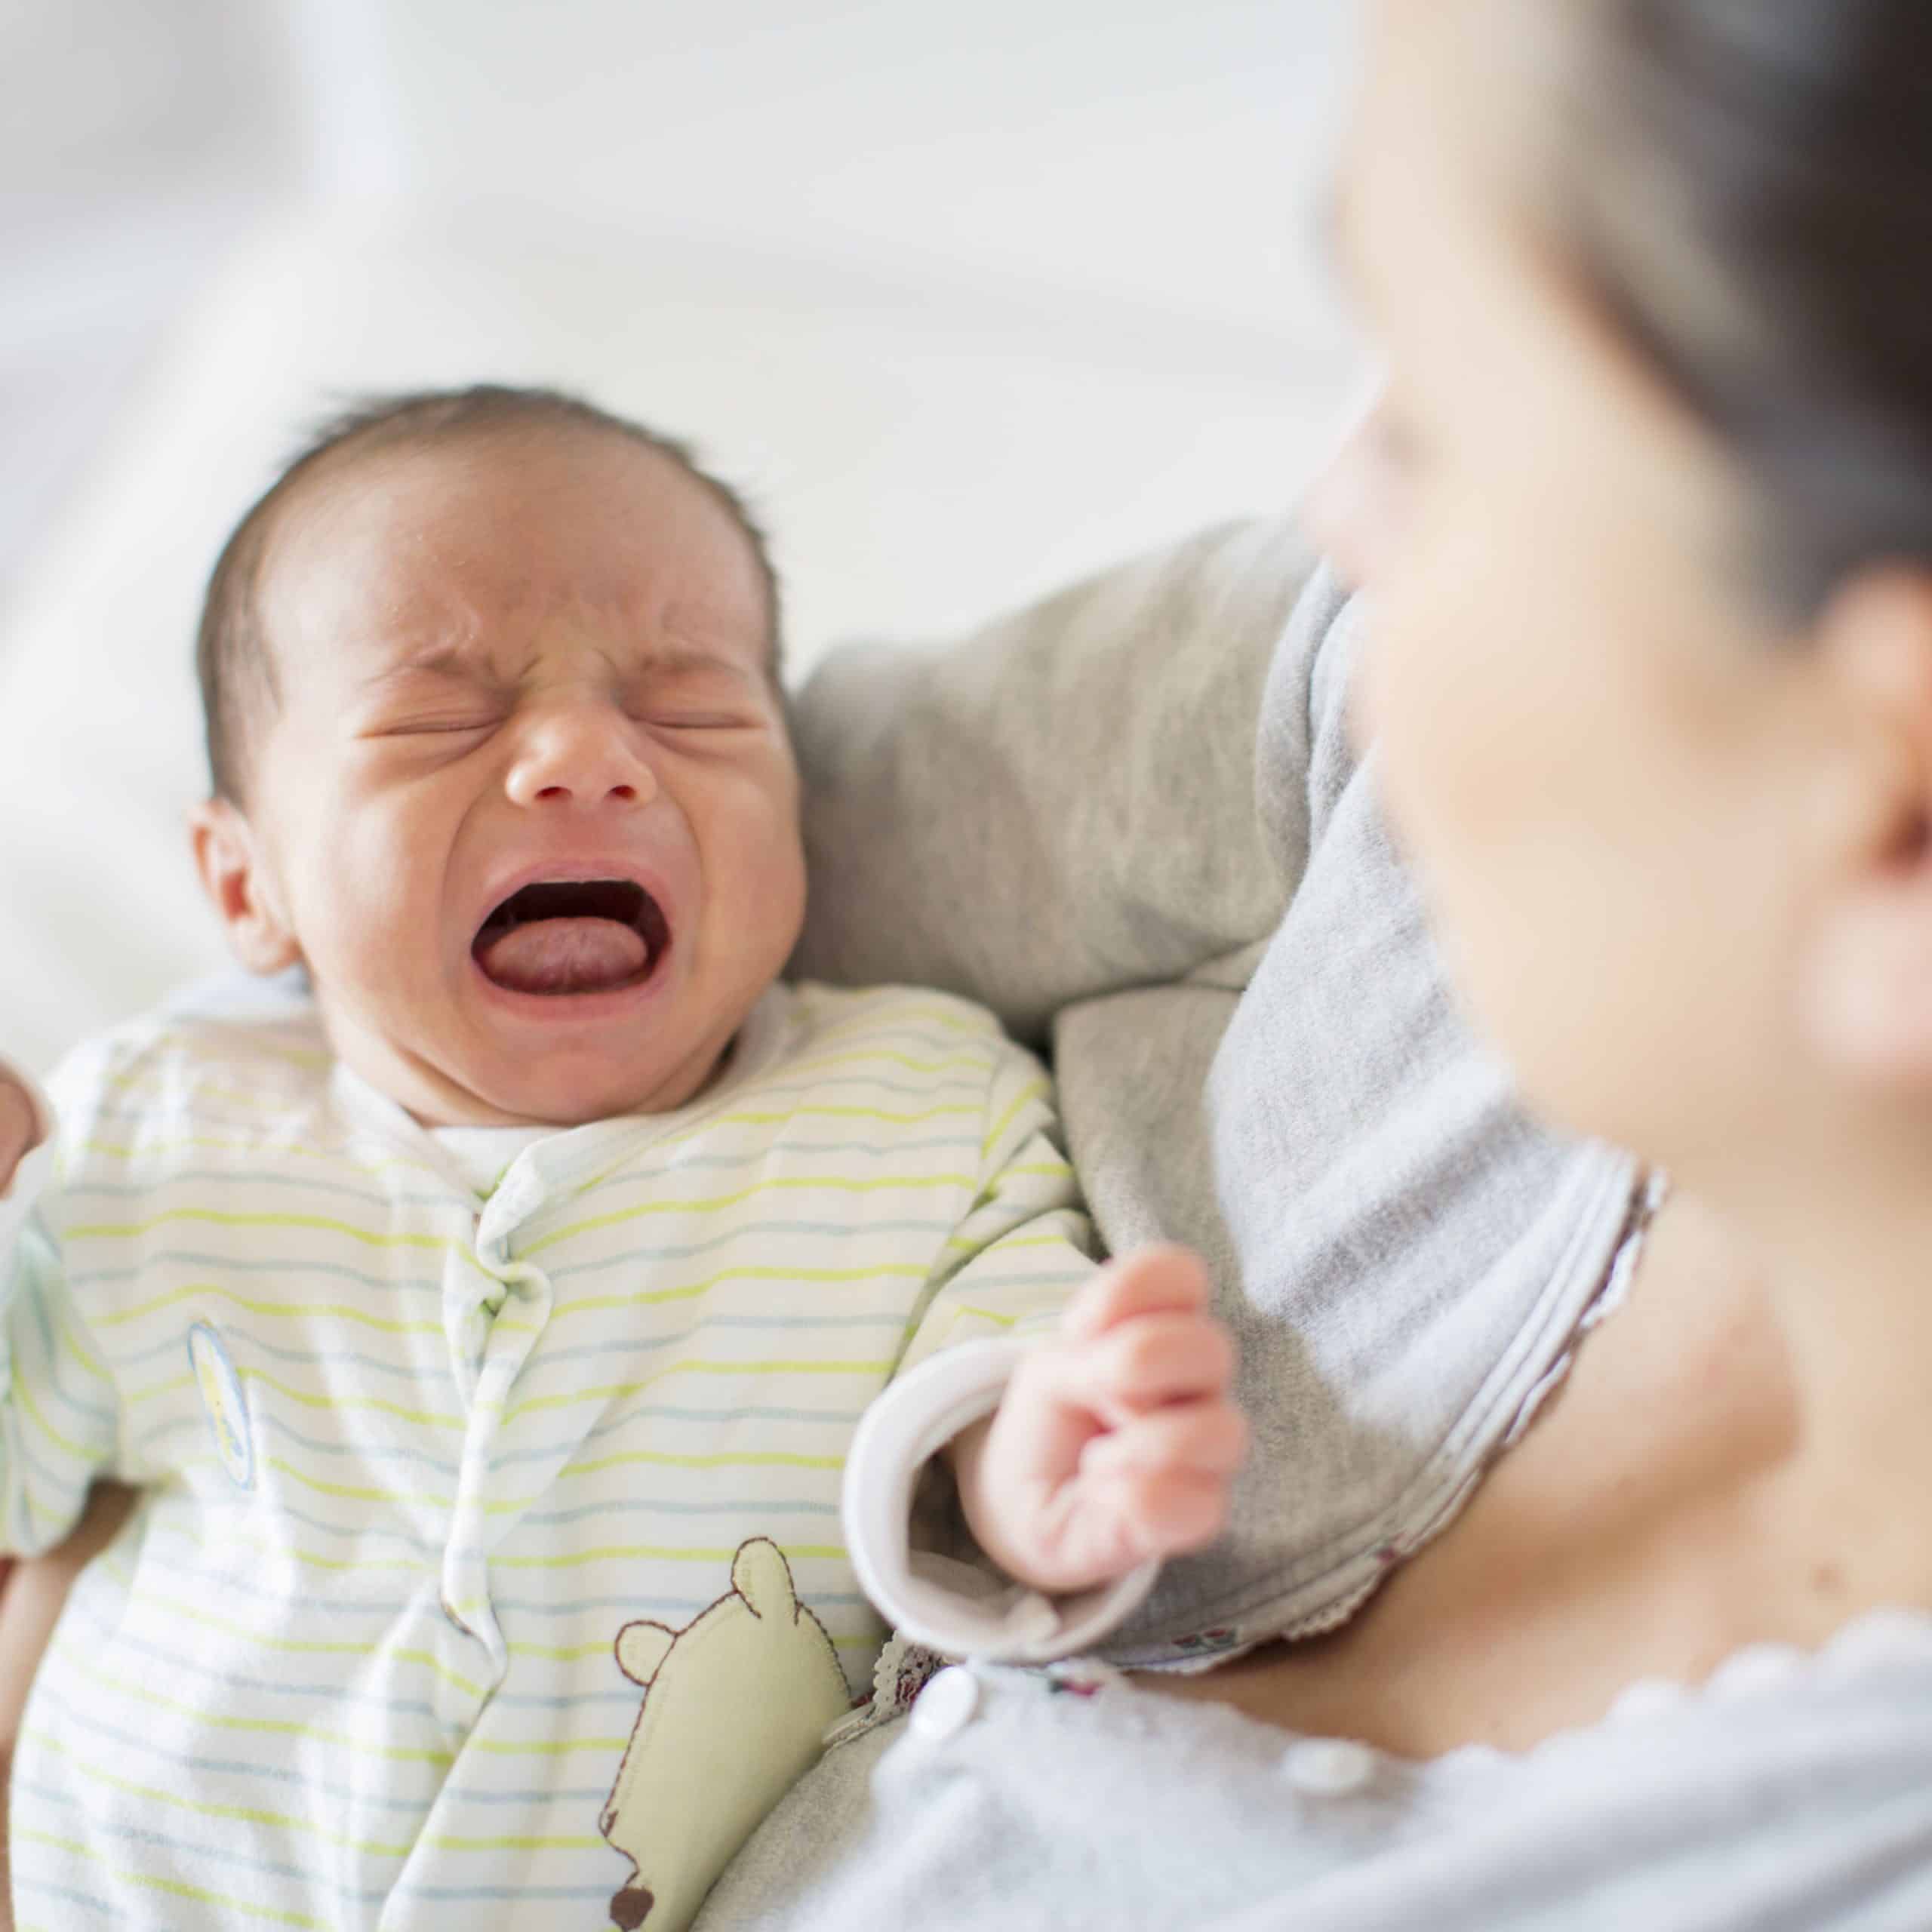 Newborn Cries After Feeding